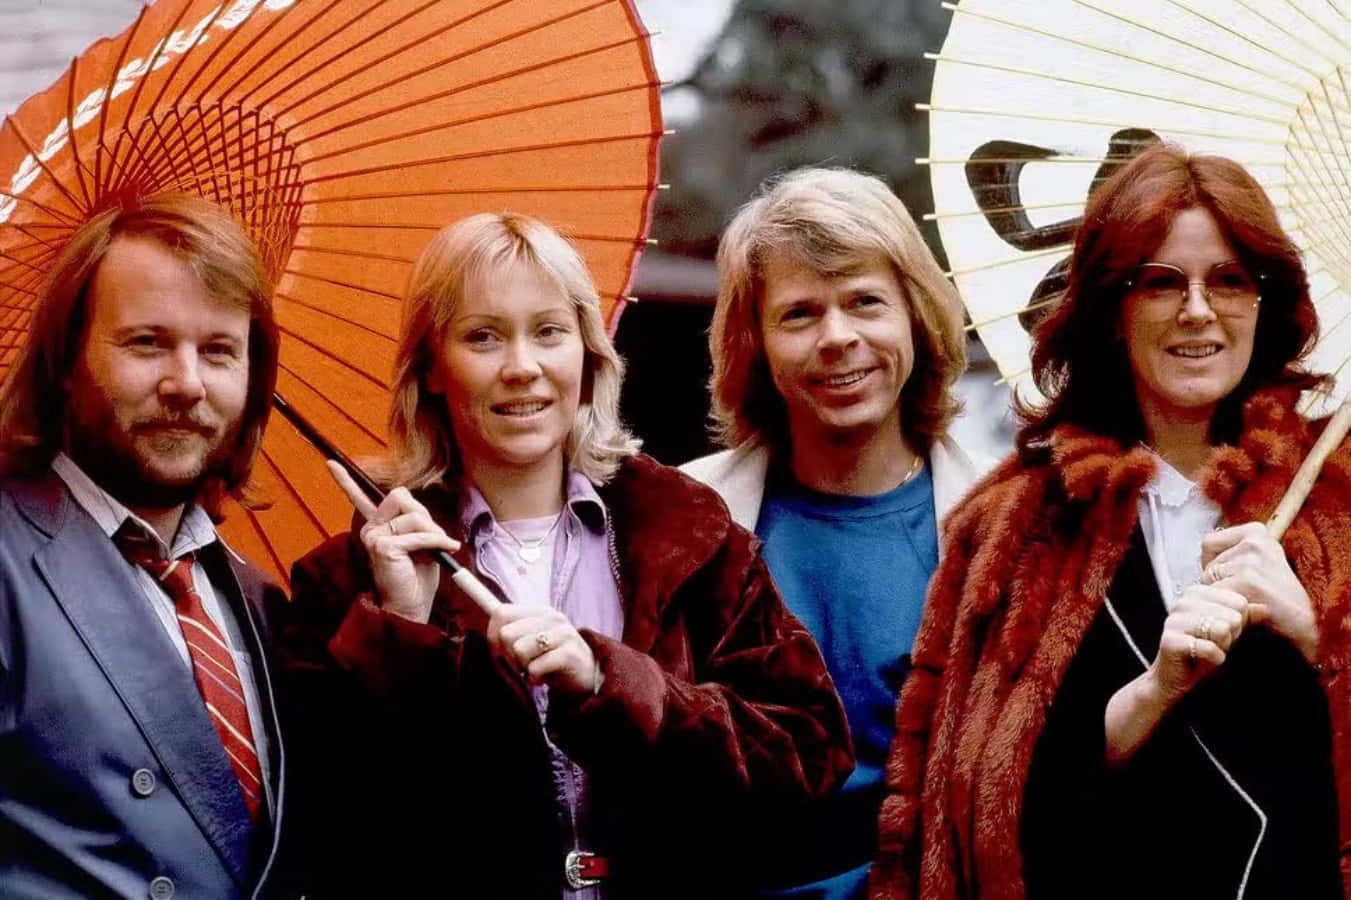 Celebrating the anniversary of the legendary Swedish music group ABBA